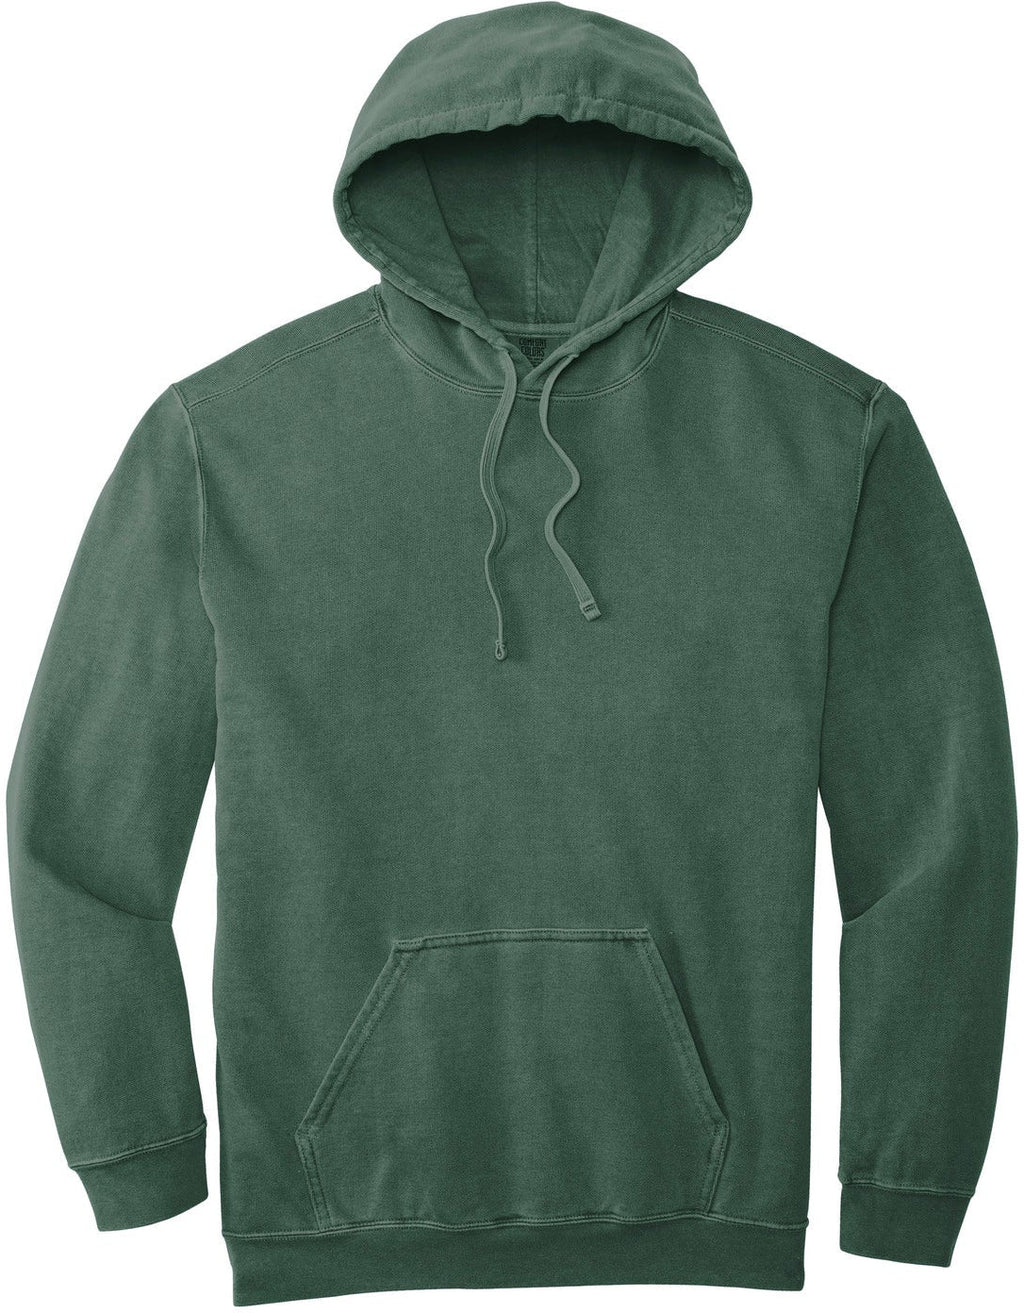 Mens Hoodie Soft Stuff Premium Quality | Color: Navy Blue | Green Comfort  #greencomfort #purecotton #softstuff #comfy #winterwear #winter #sweaters